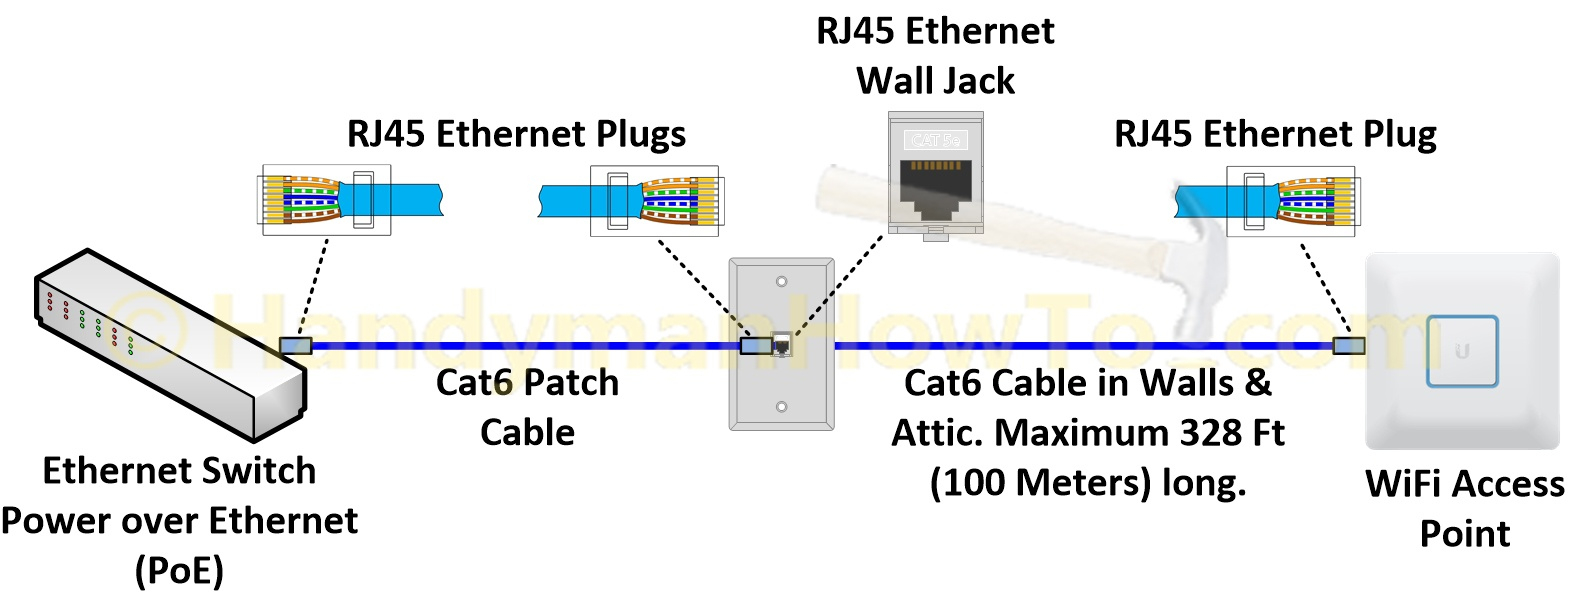 Ethernet Wall Jack Wiring Poe - Wiring Diagram Data - Cat5 Poe Wiring Diagram